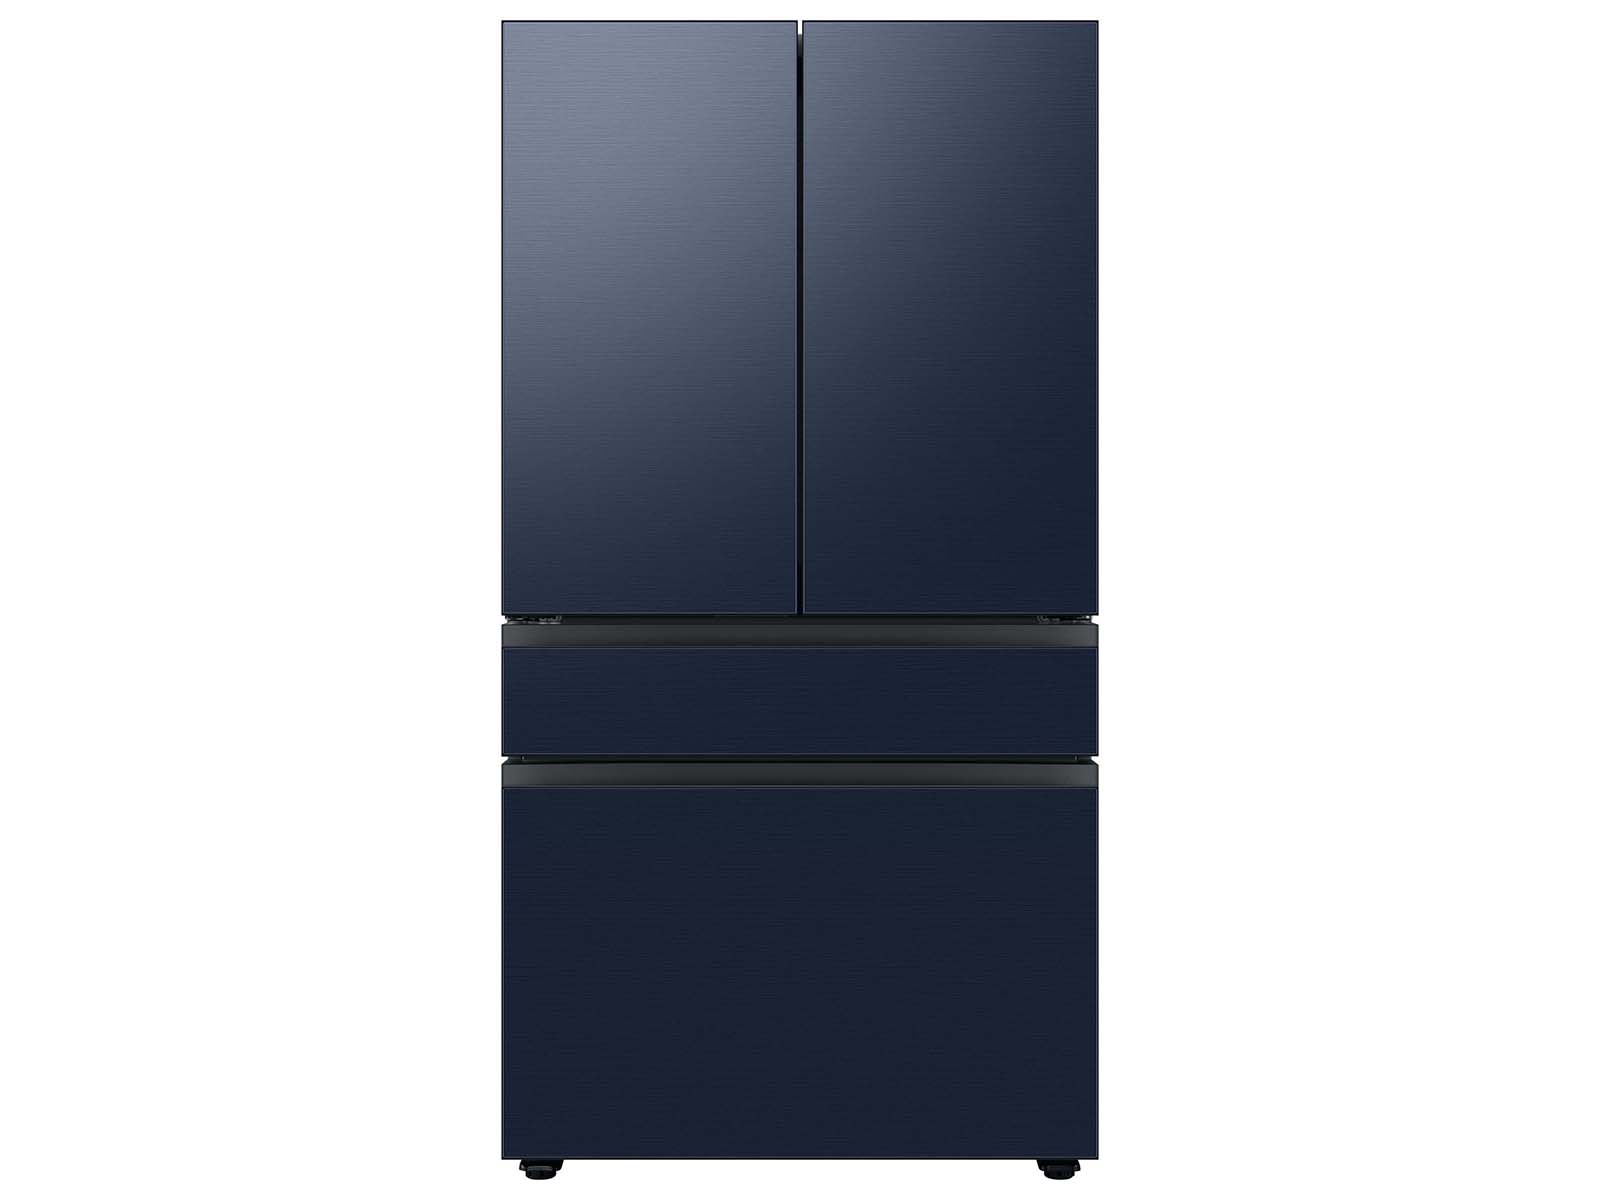 Bespoke 4-Door French Door Refrigerator (23 cu. ft.) with Customizable Door Panel Colors and Beverage Center™ in Navy Steel with Stainless Steel Middle Panel